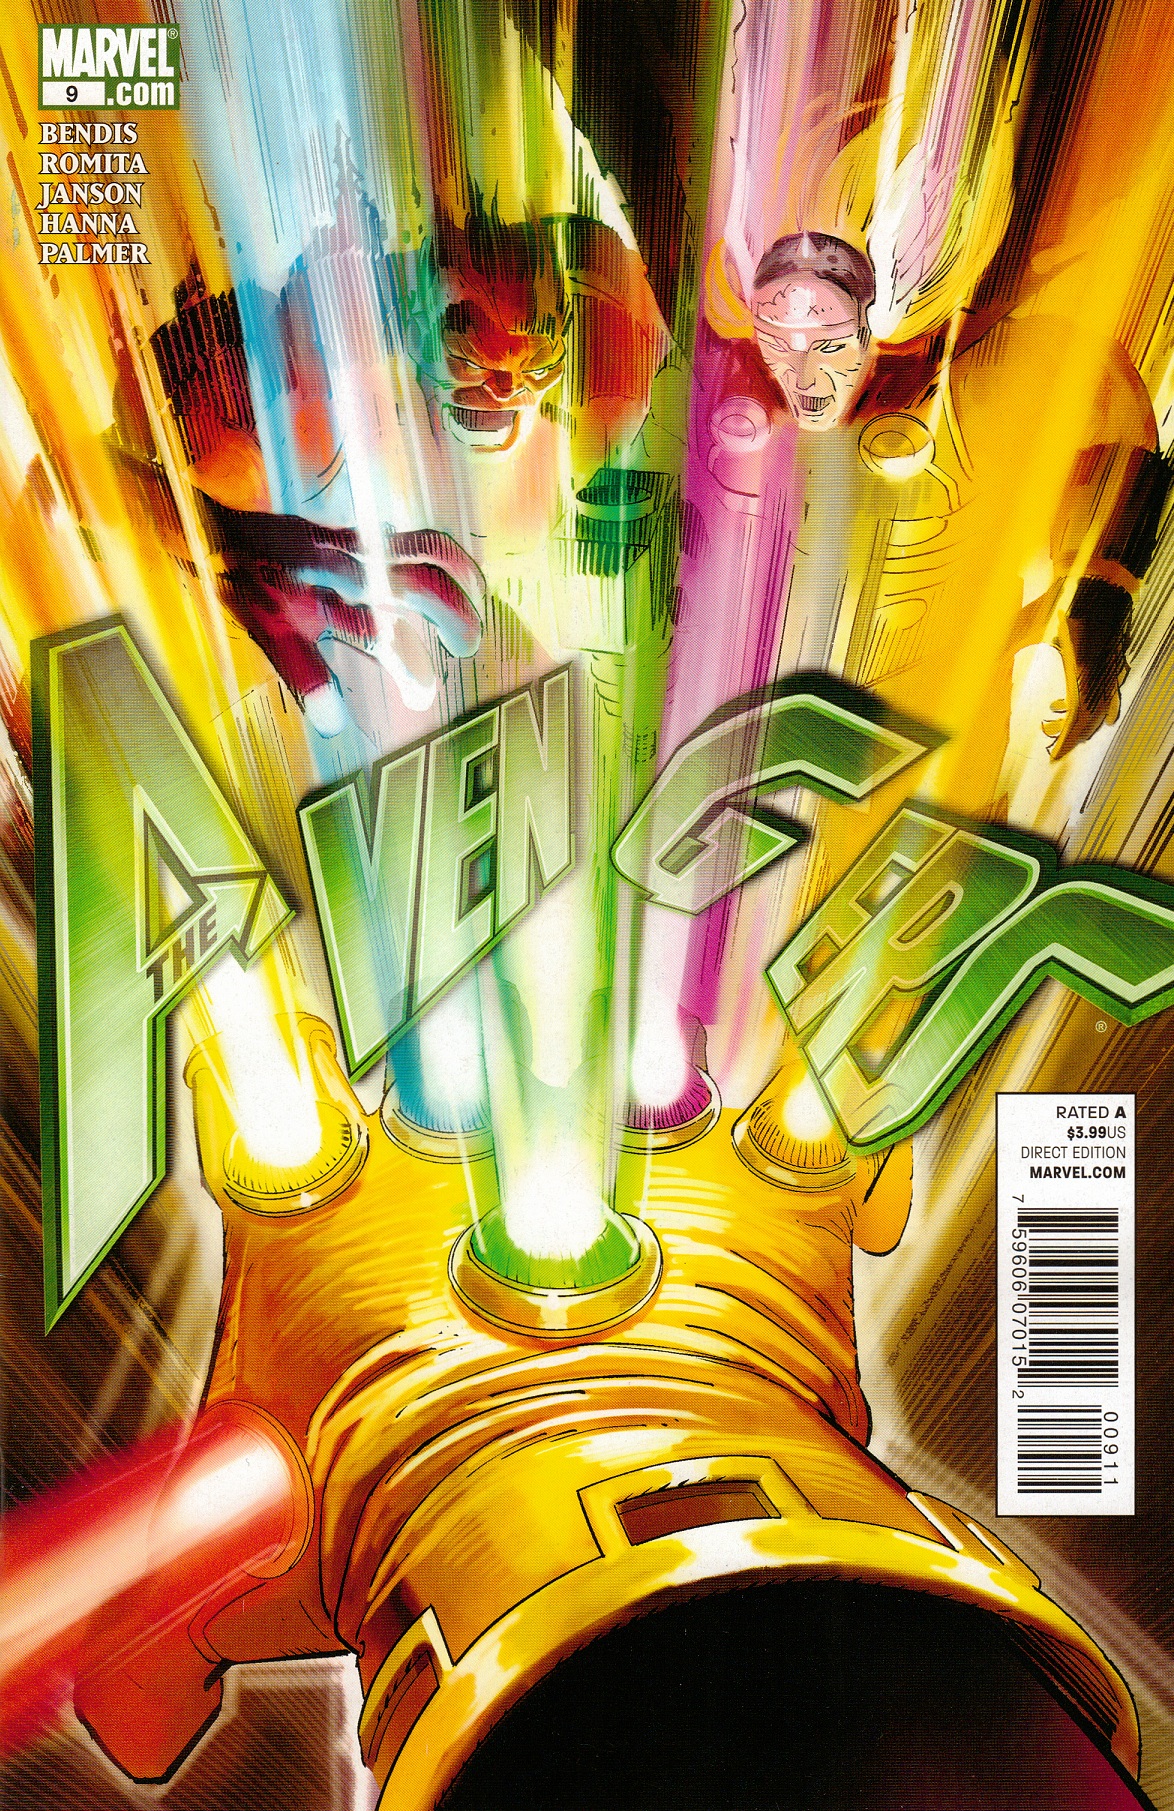 The Avengers Vol. 4 #9